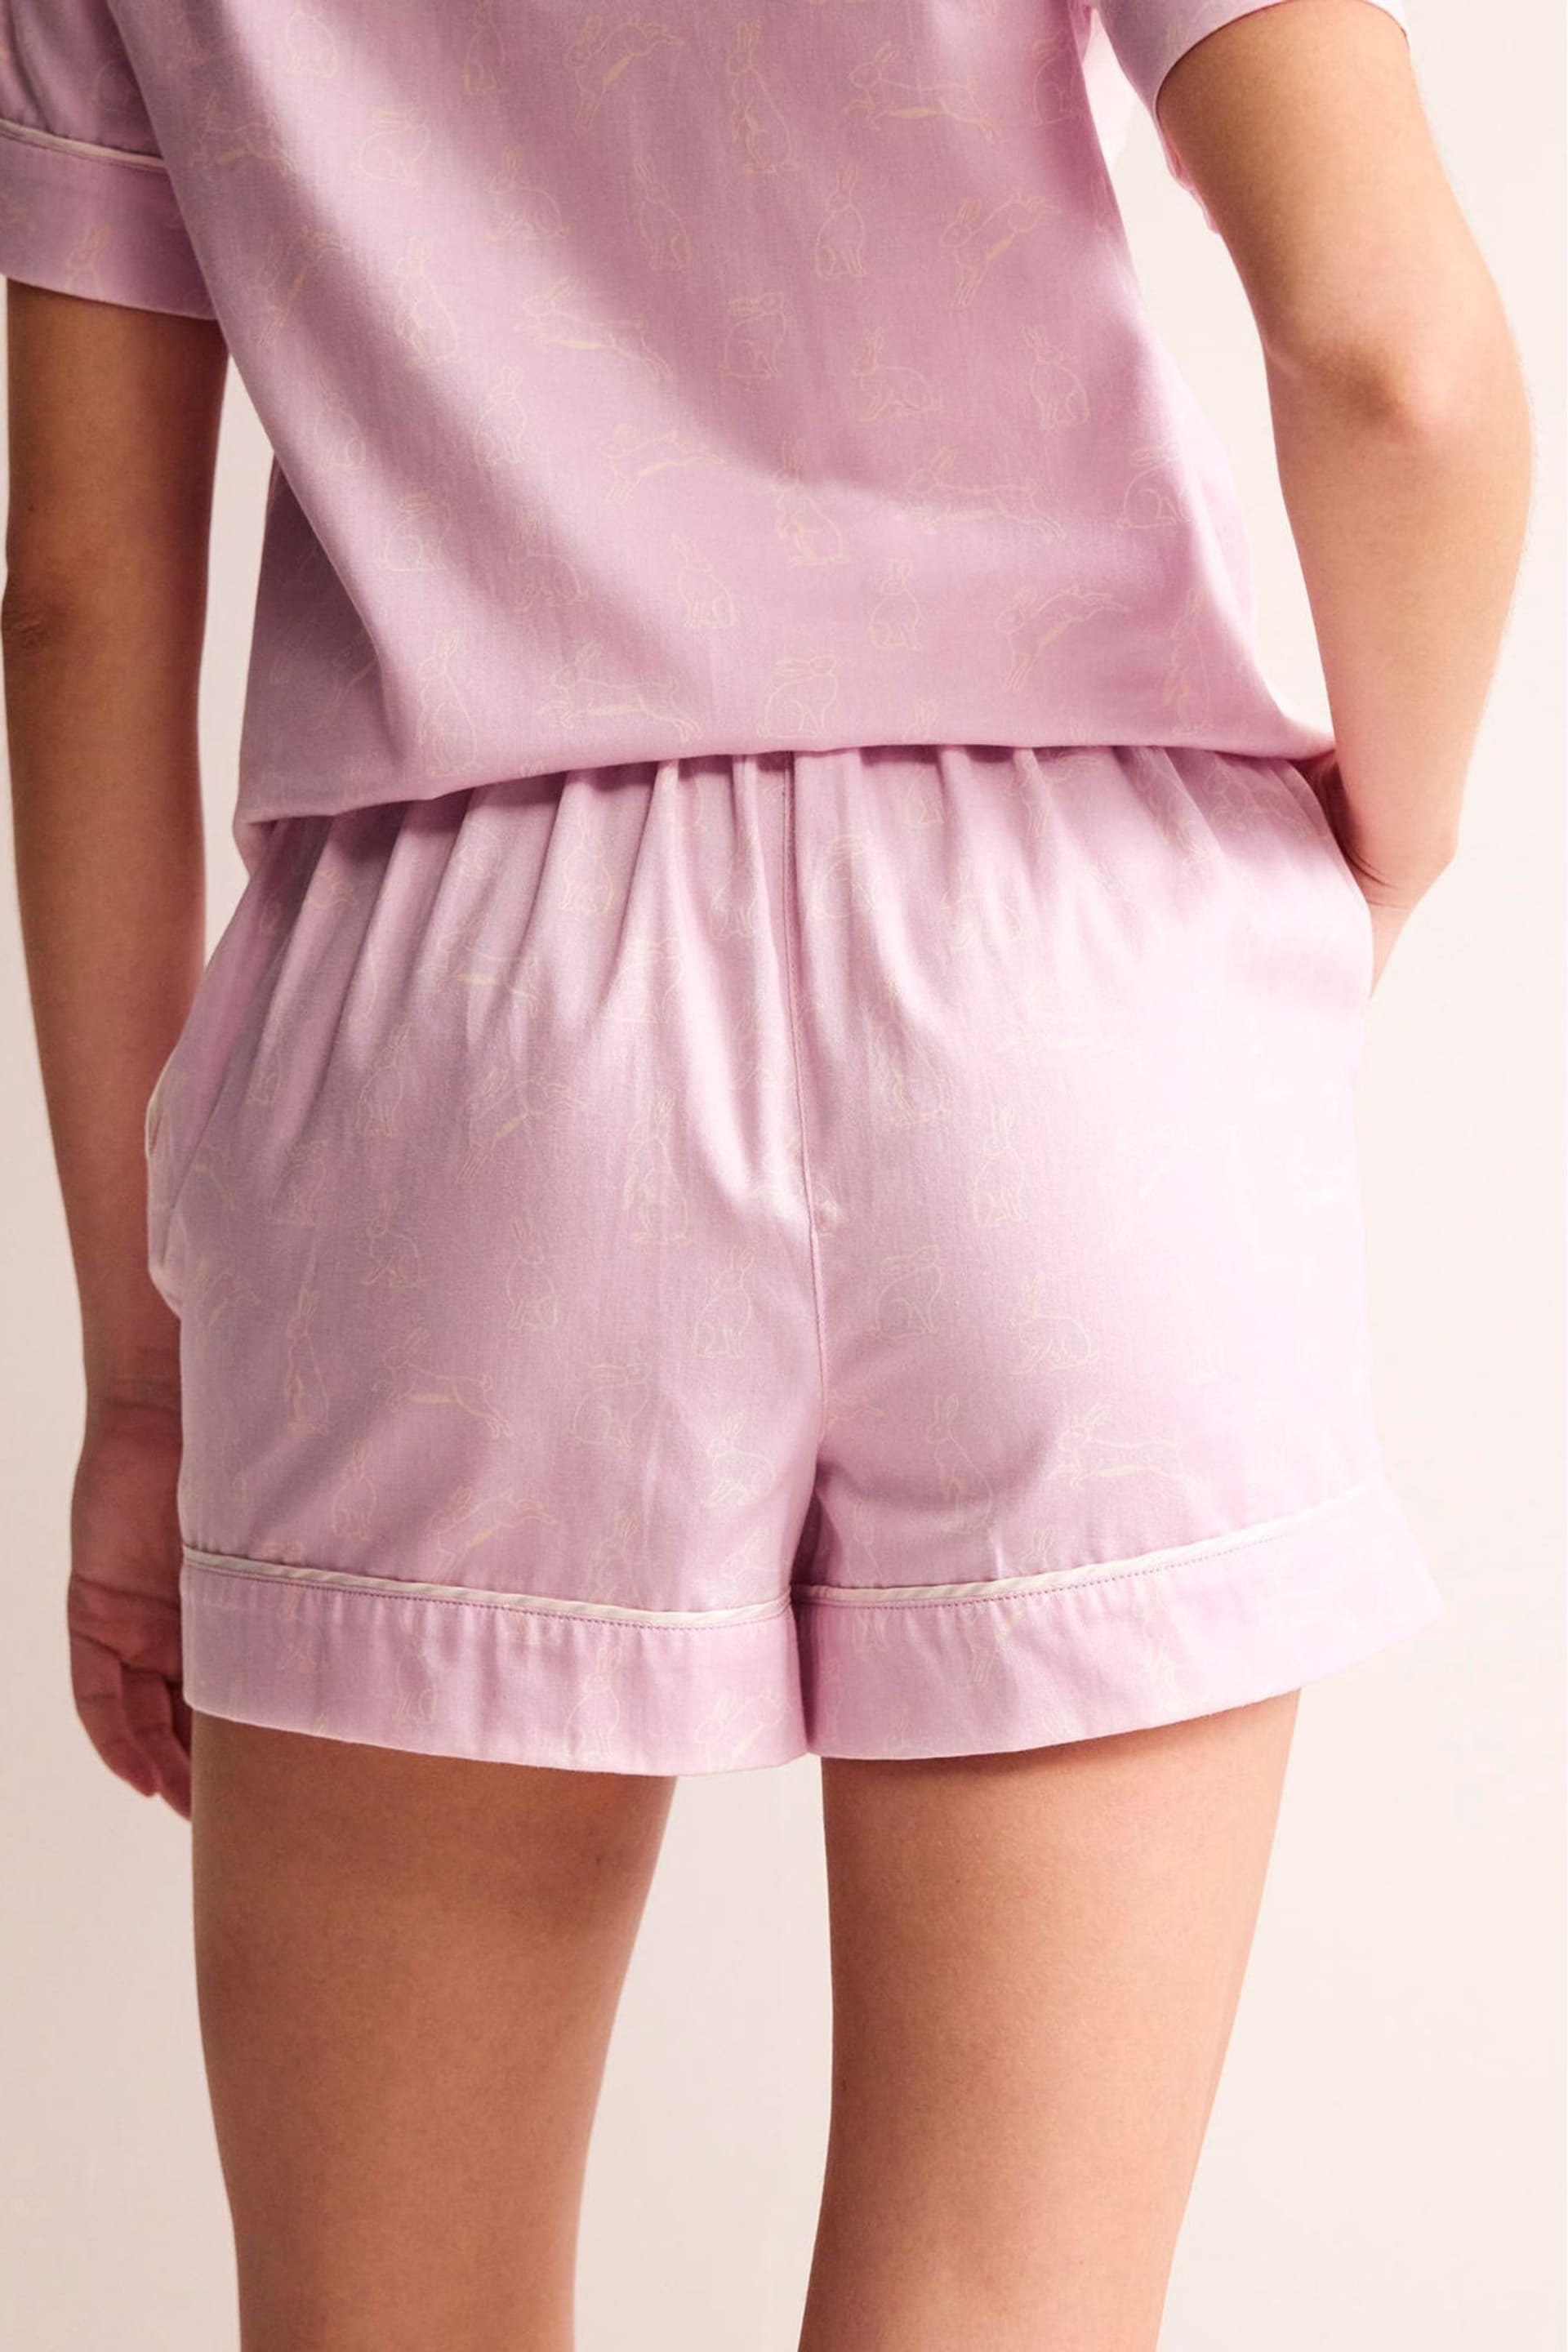 Boden Pink Cotton Sateen Pyjama Shorts - Image 3 of 5